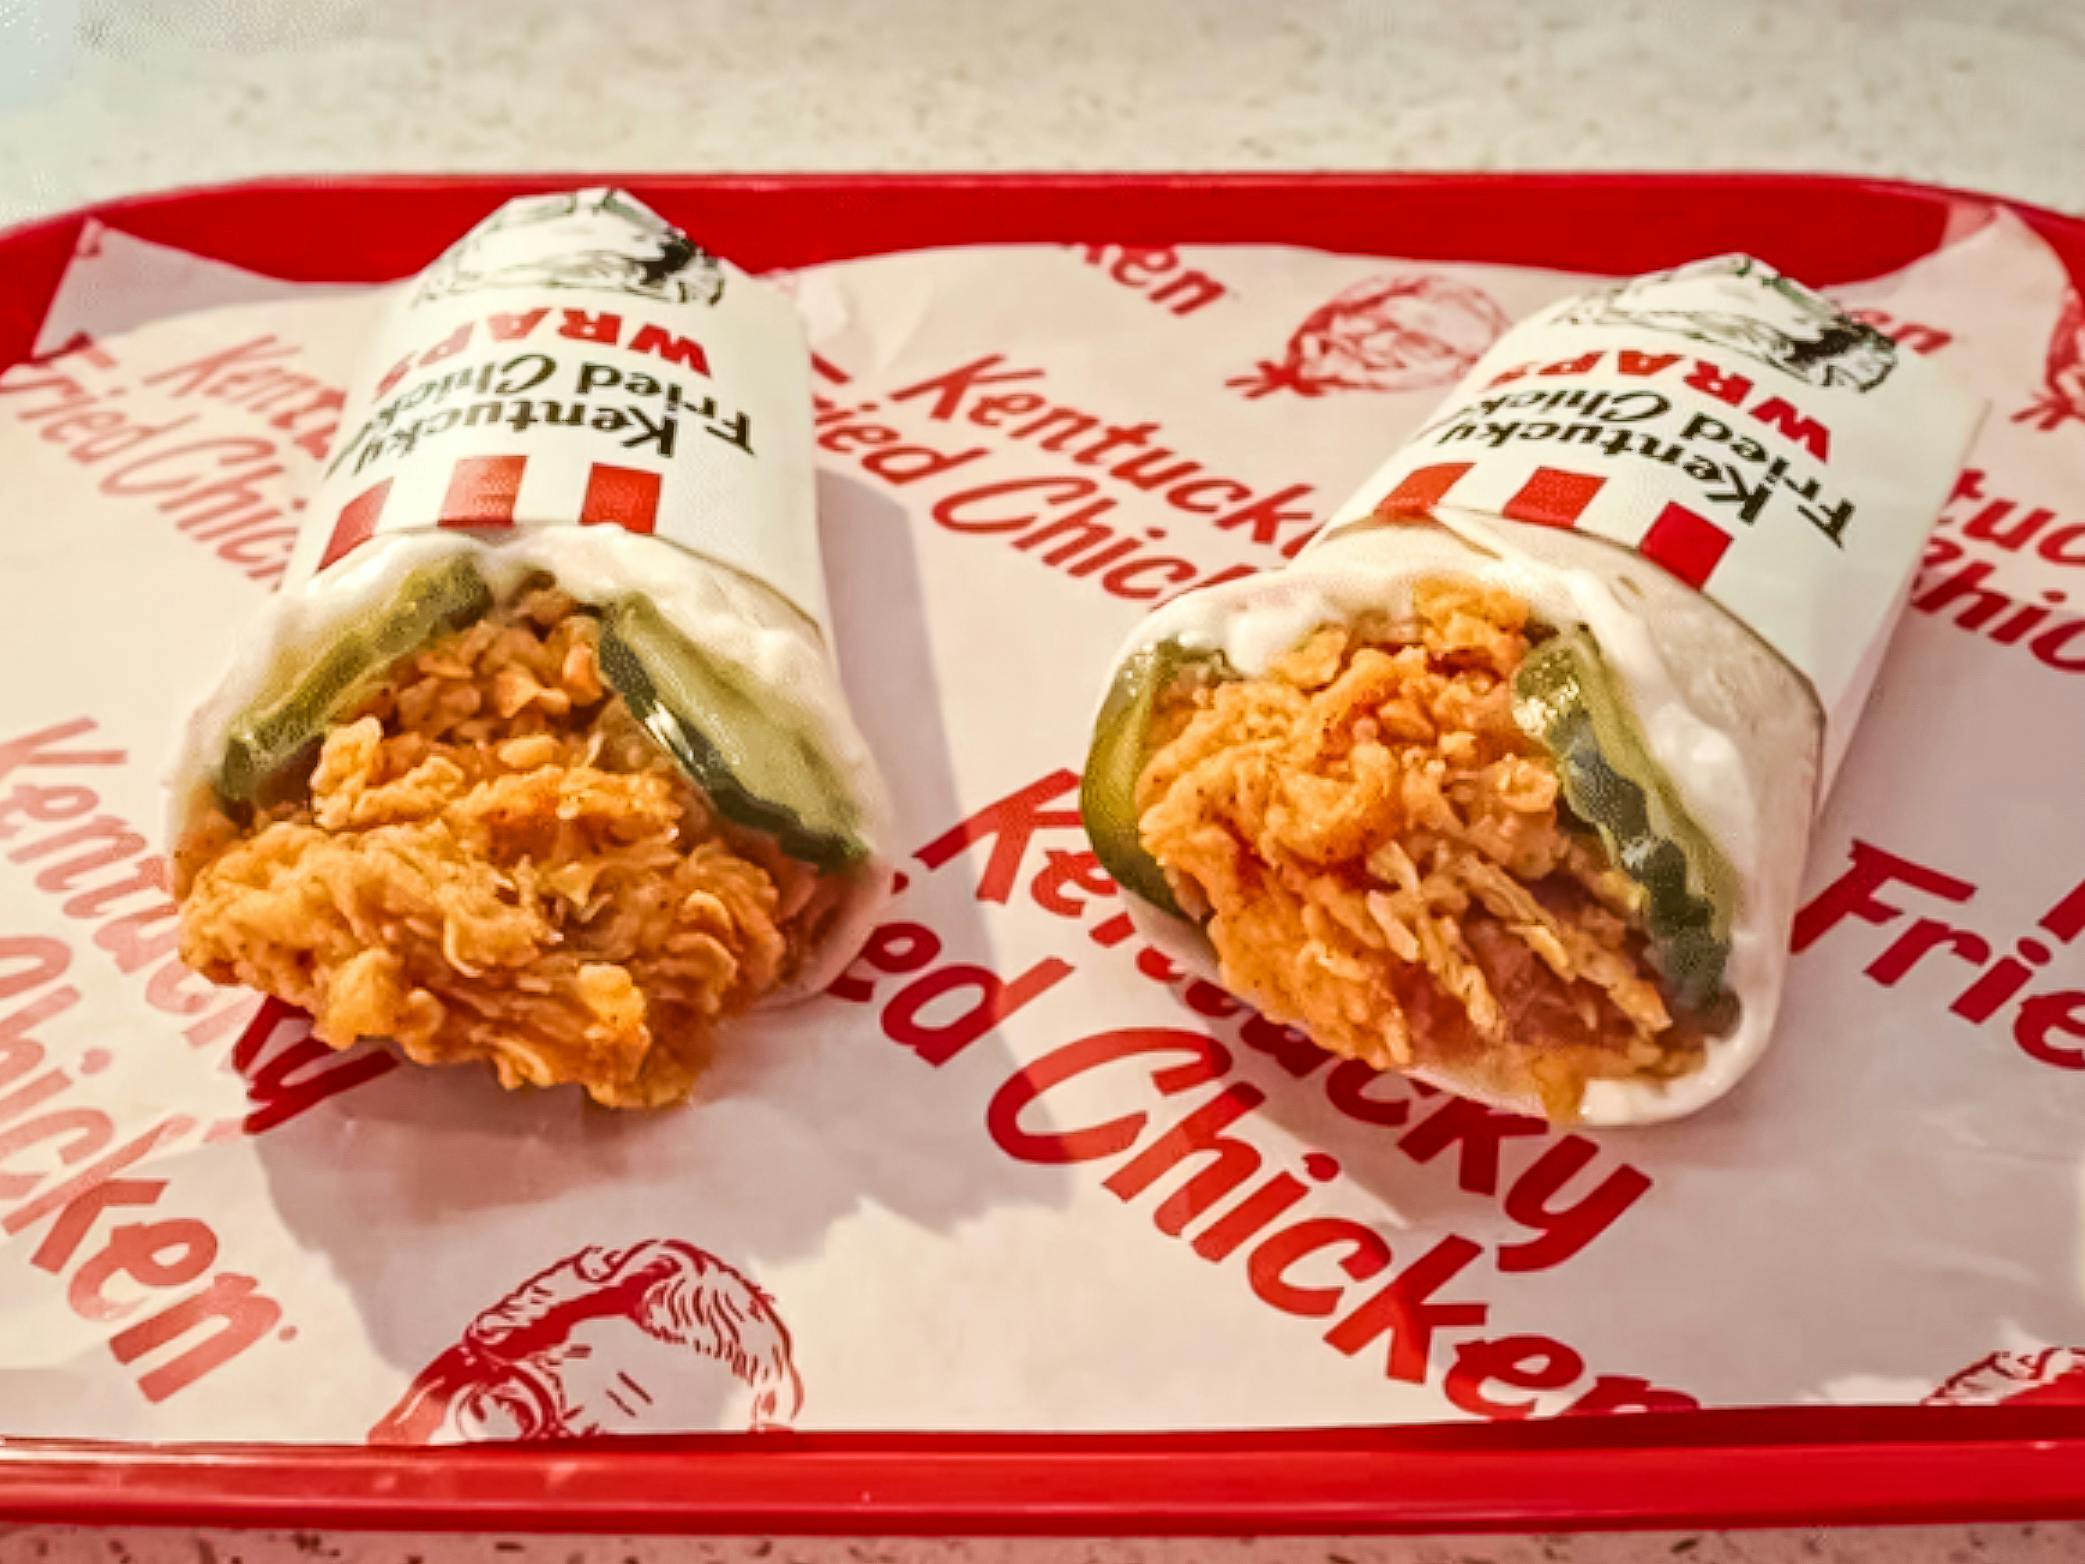 Two KFC wraps on a tray